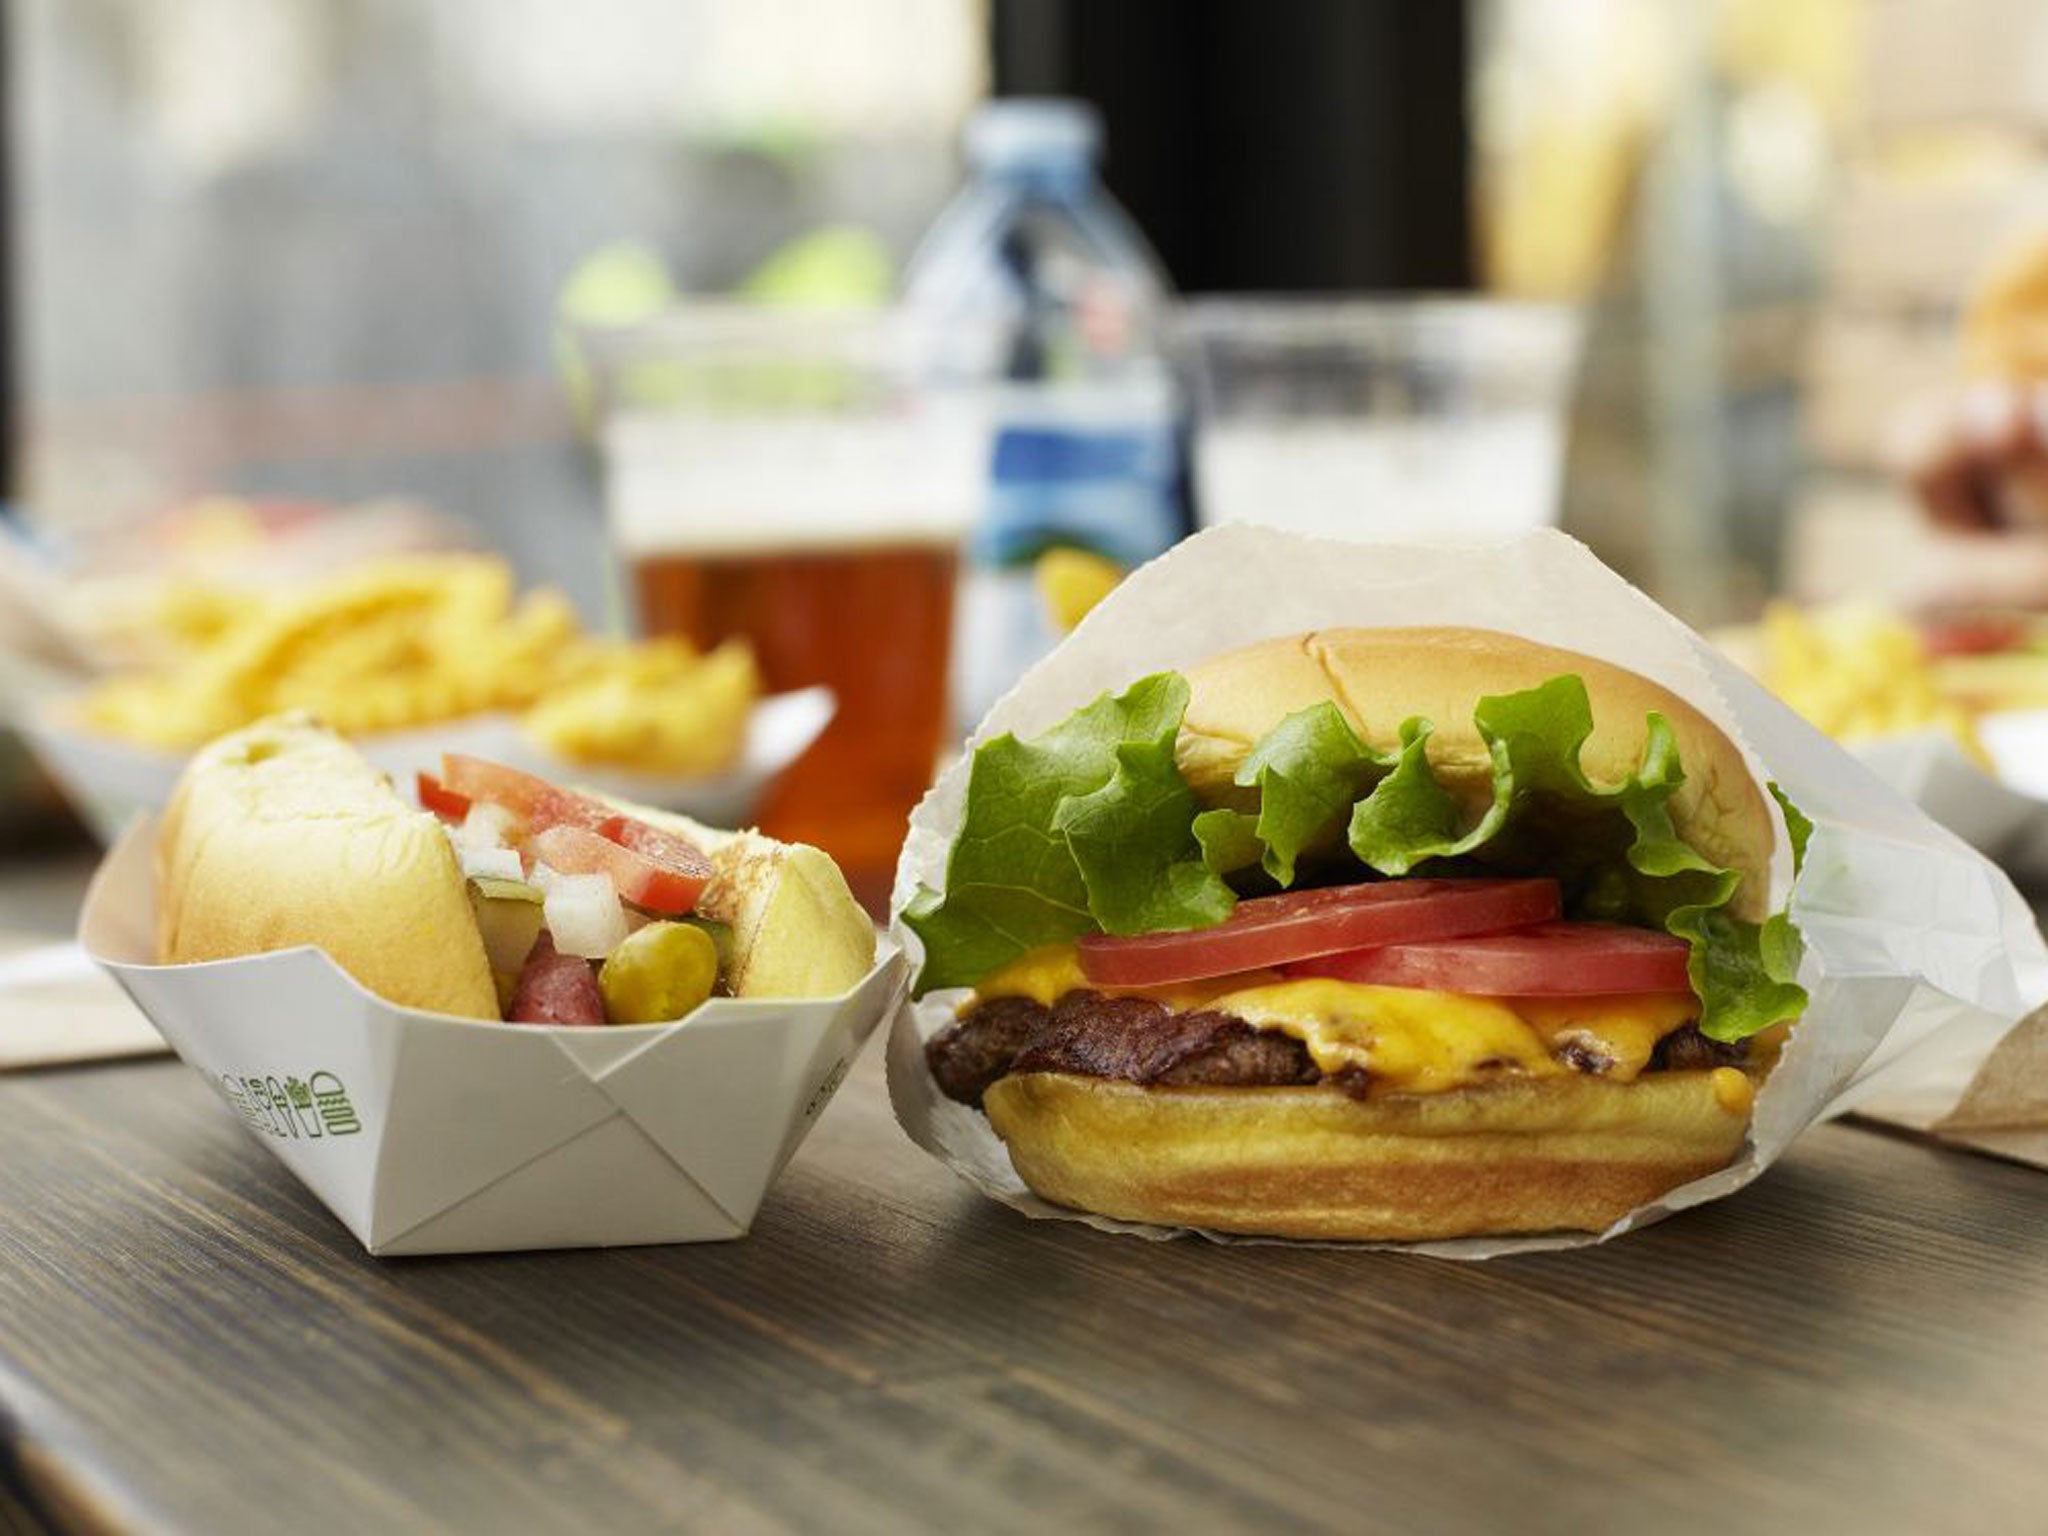 Shake Shack: Coming next to Britain’s burgeoning burger market